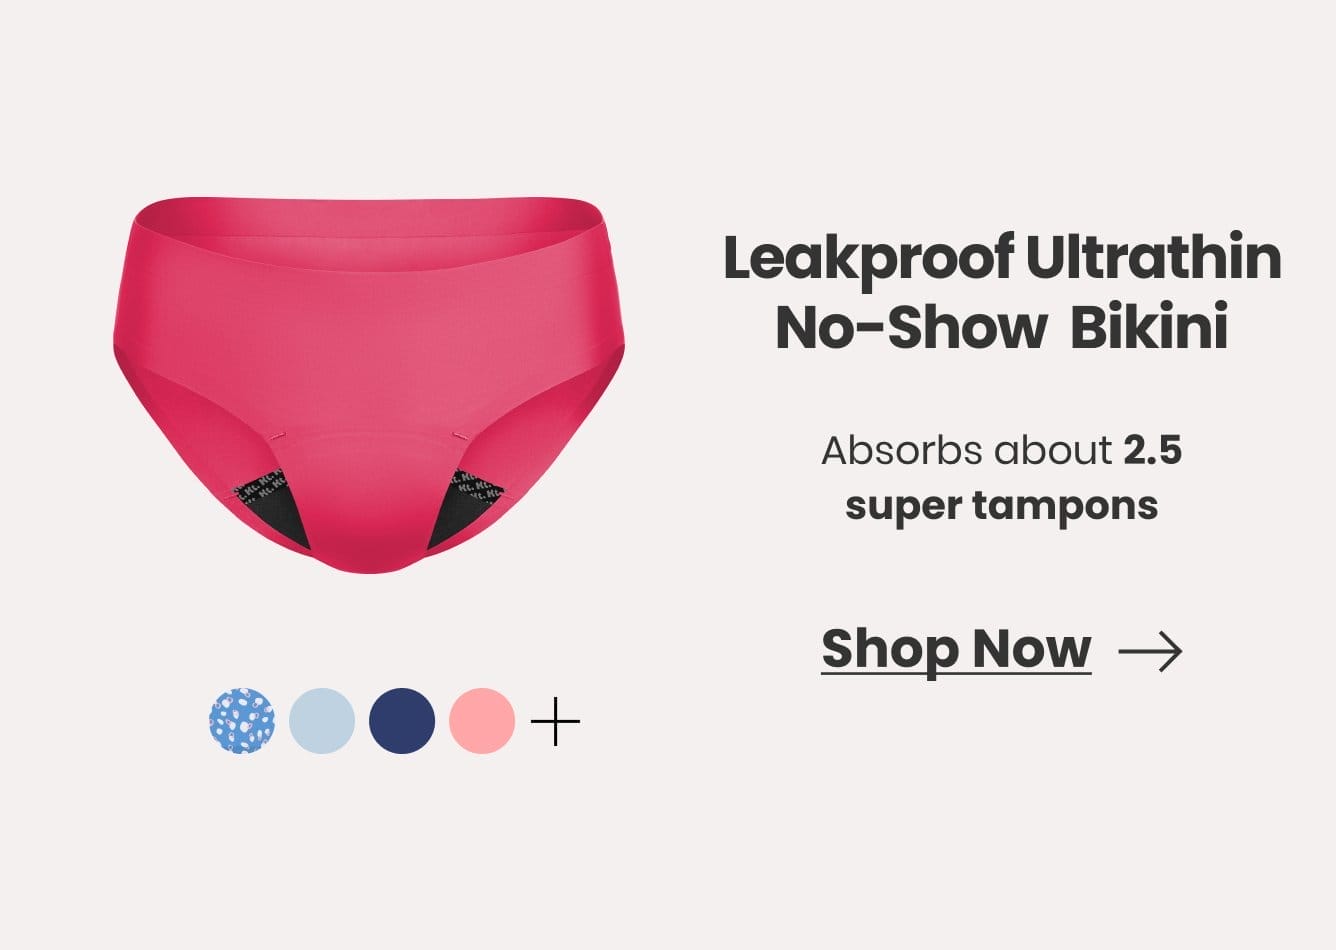 Leakproof Ultrathin No-Show Bikini